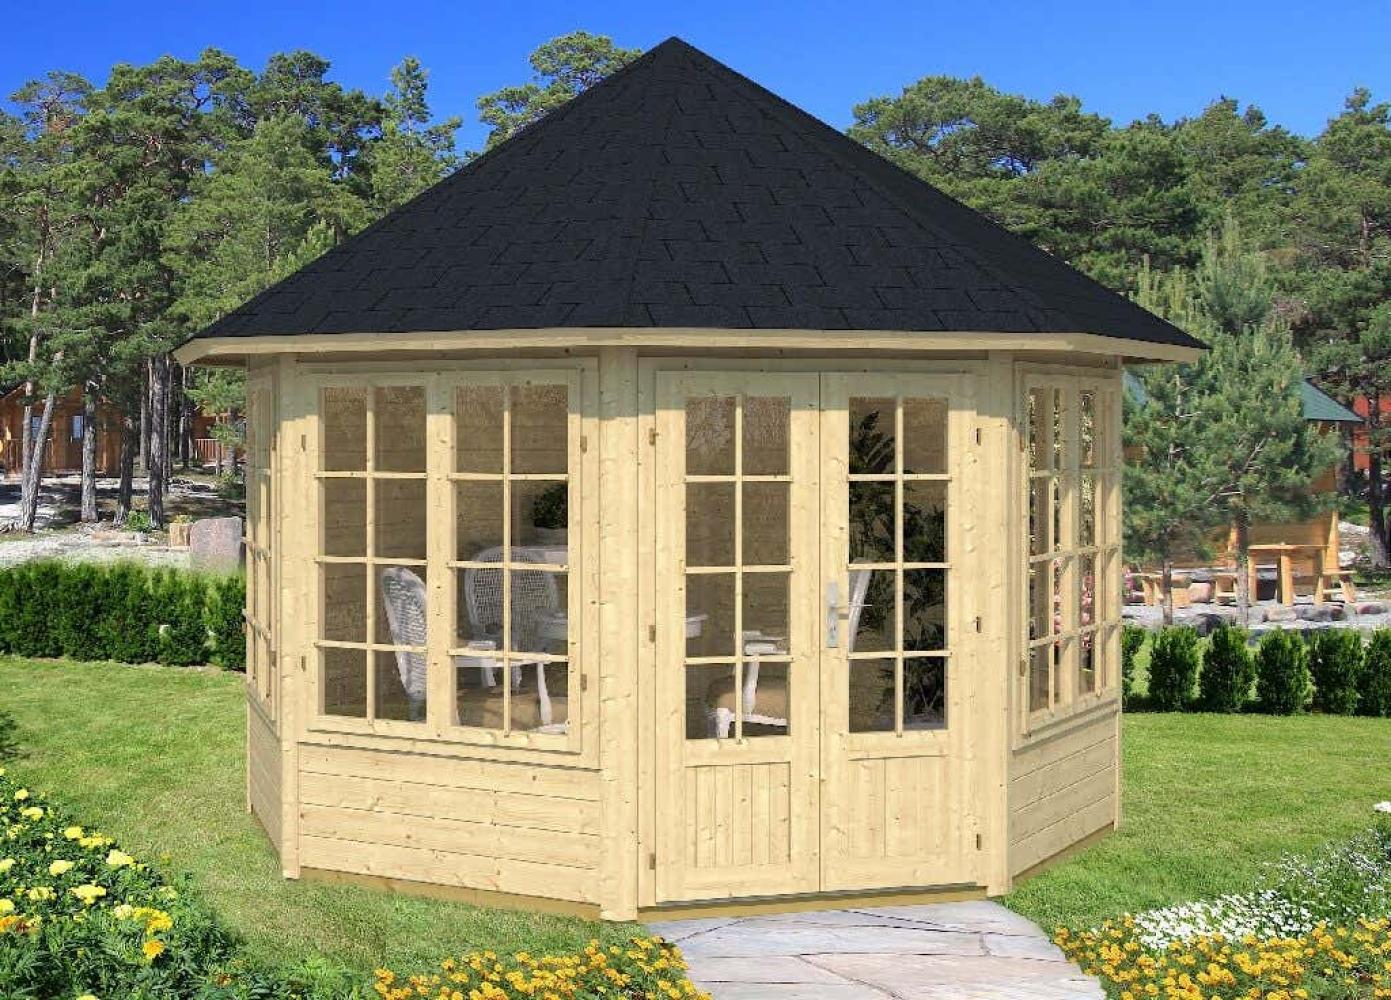 Tenekaubandus Gartenpavillon Modell Emma-40 mit vier Fenstern Gartenpavillon aus Holz Gartenhütte Gartenlaube Bild 1